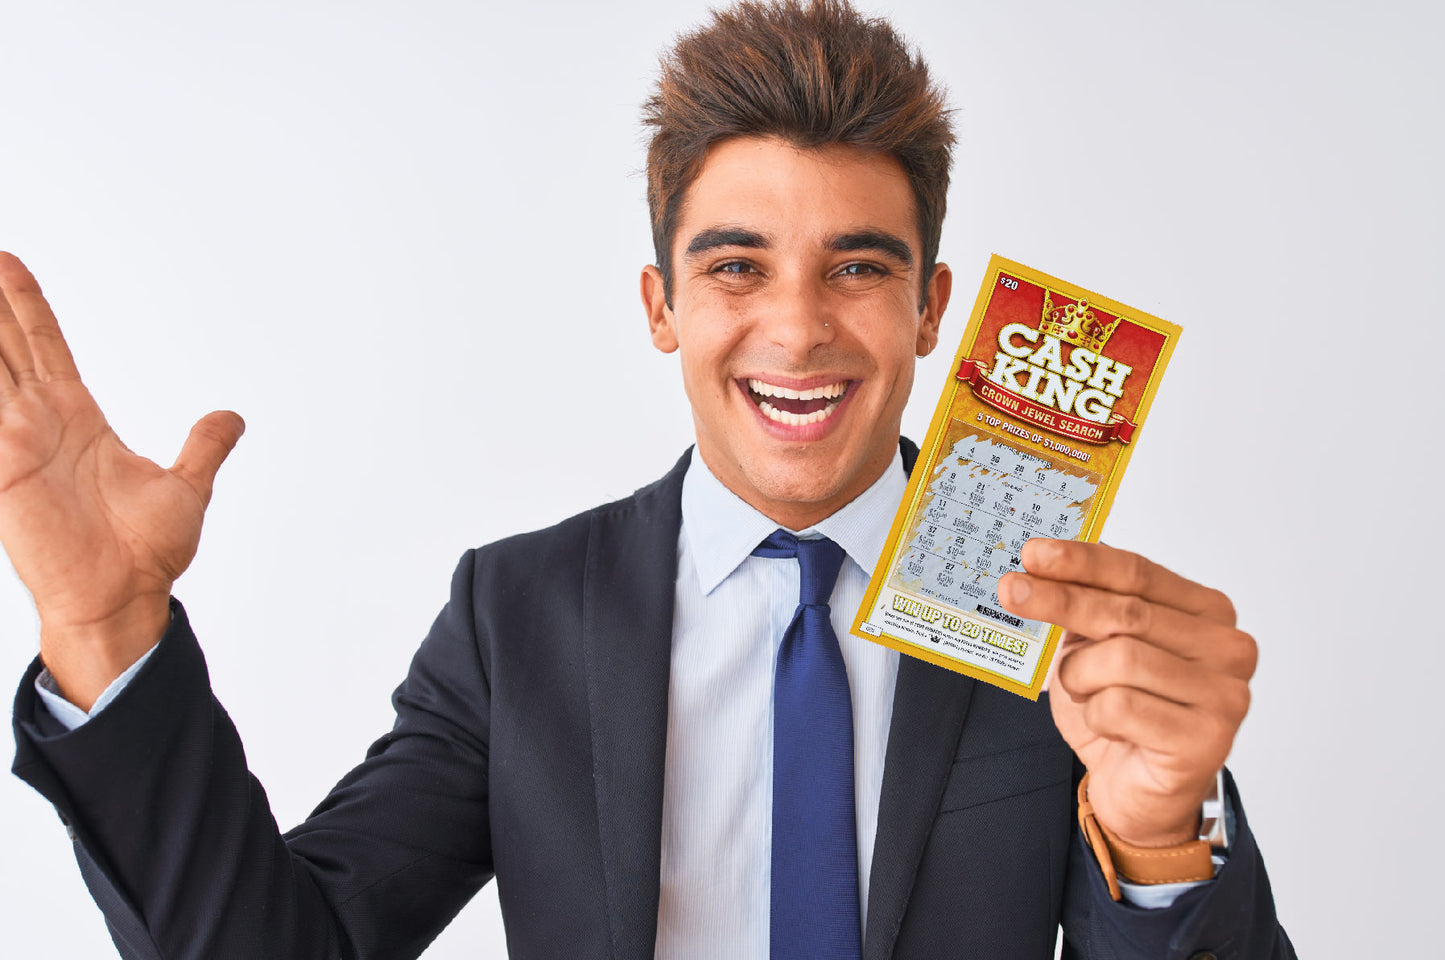 Cash King & Millionaire Jackpot Fake Lottery Tickets